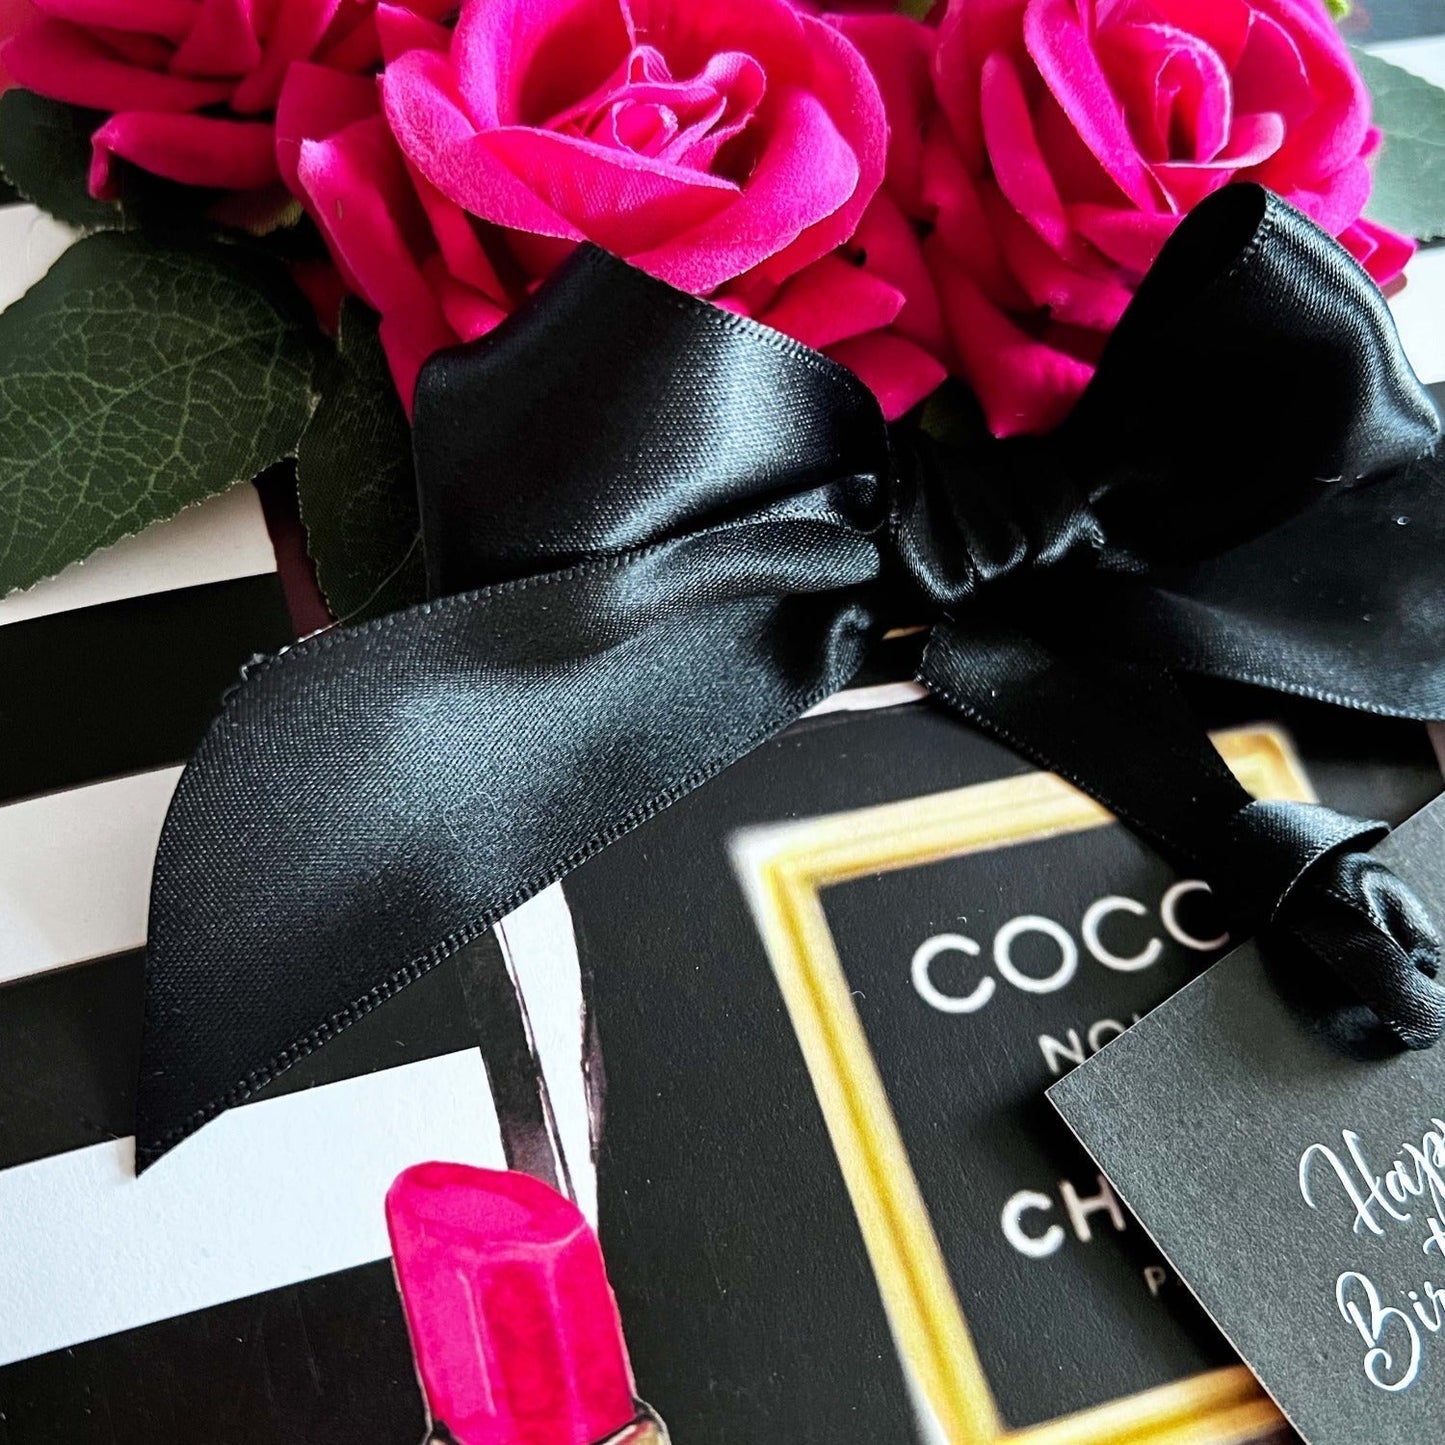 pink lipstick and perfume 50th luxury handmade cards